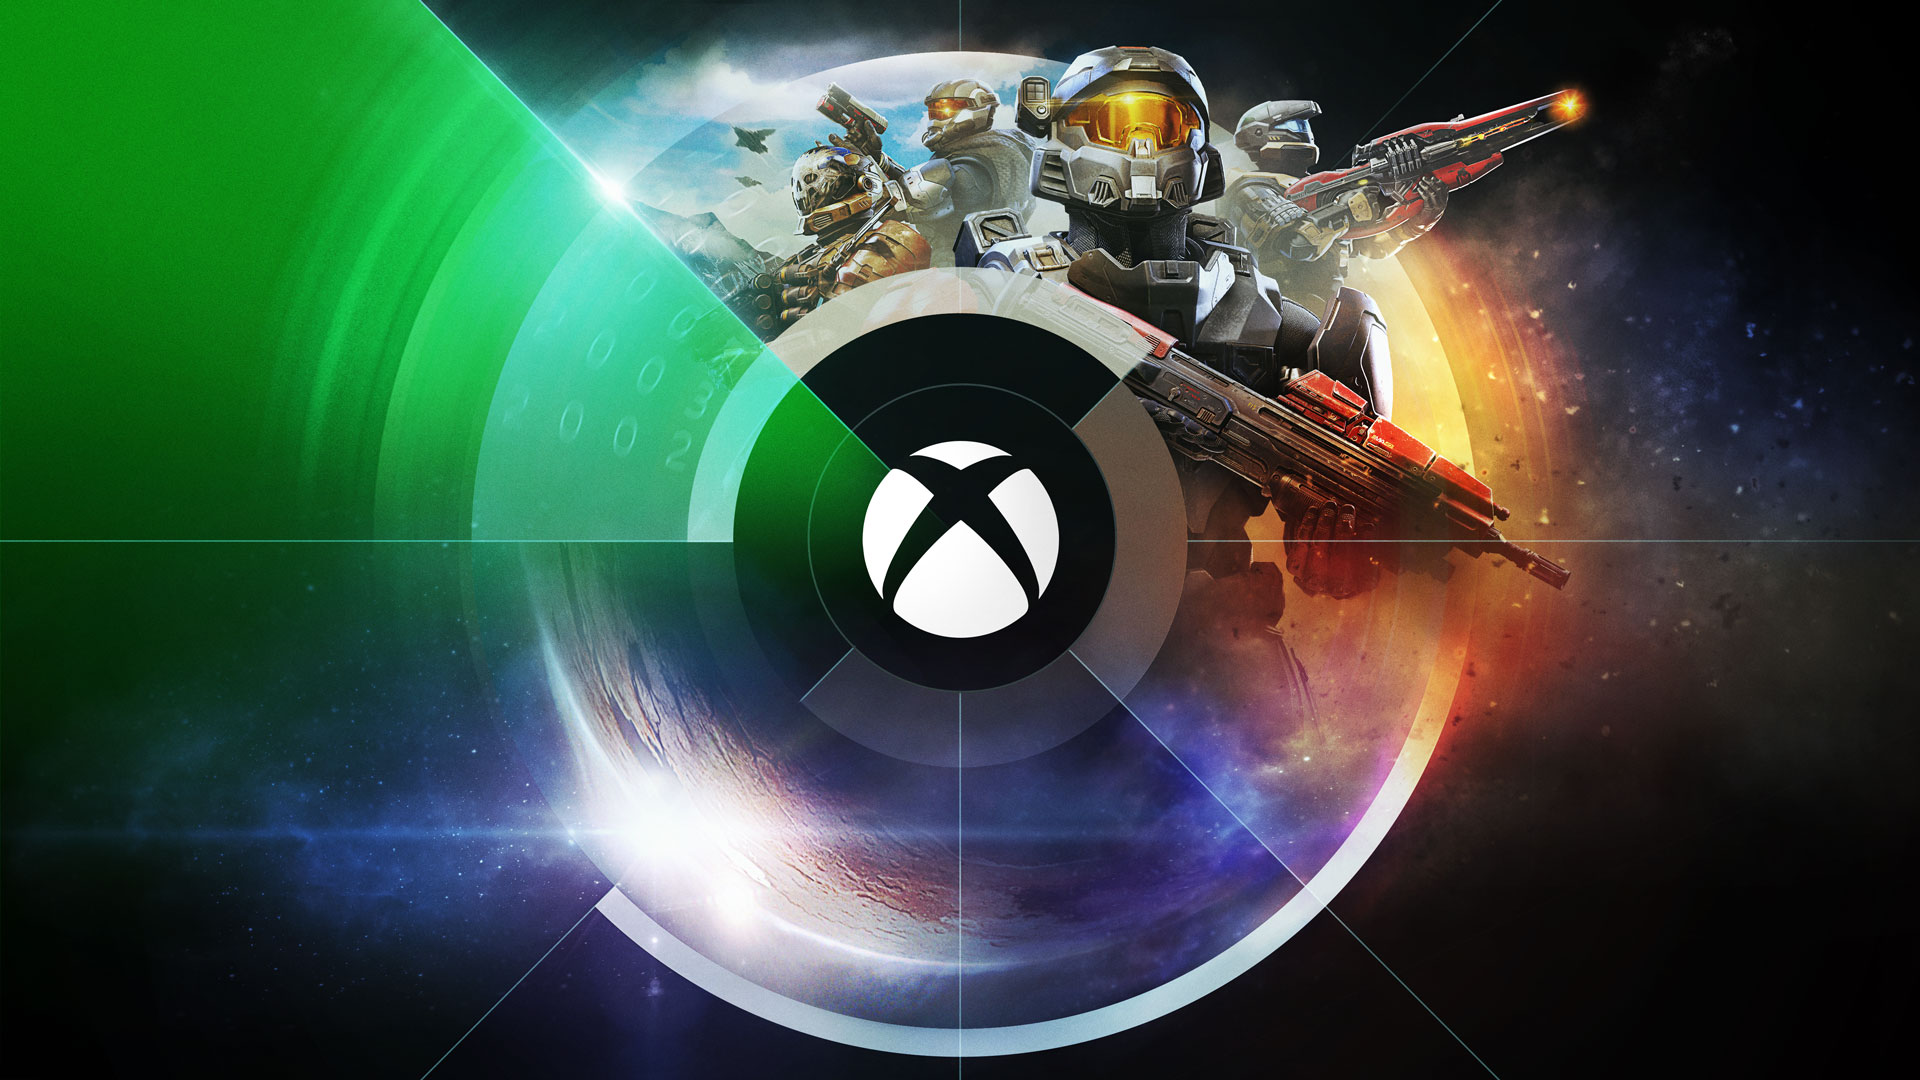 E3: Microsoft Flight Simulator coming to Xbox, PC - CNET